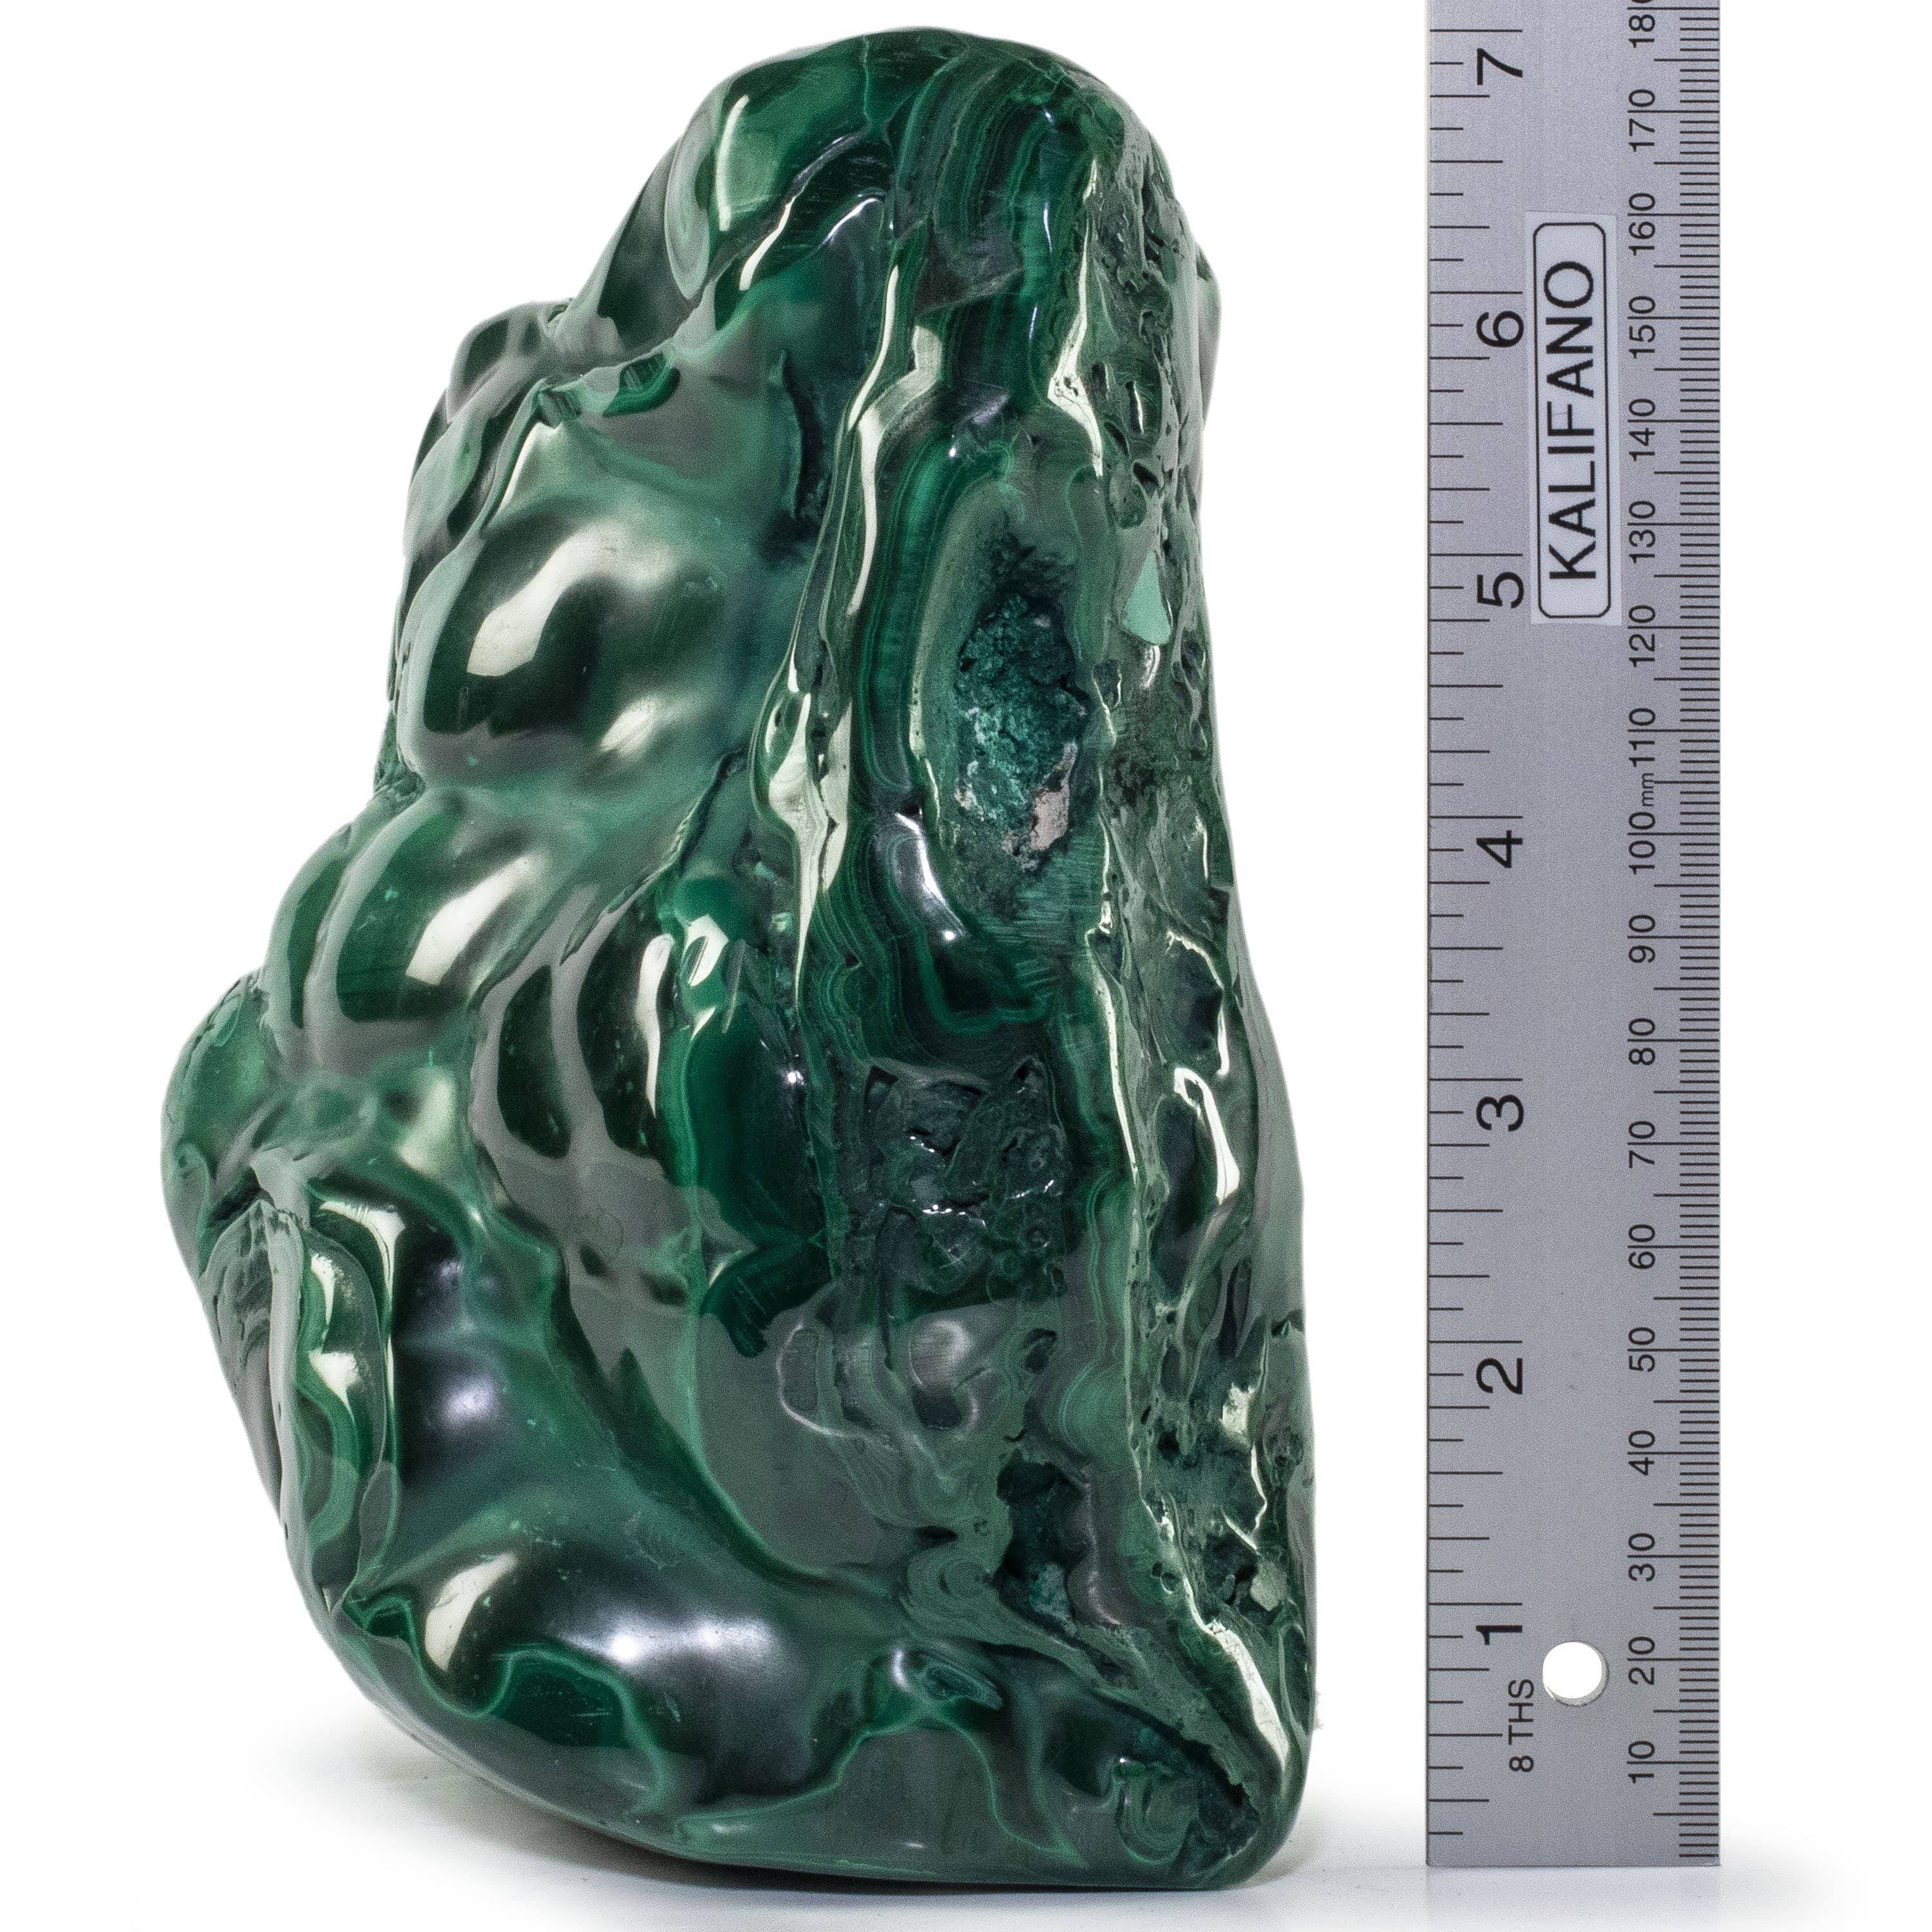 Kalifano Malachite Rare Natural Green Malachite Polished Freeform Specimen from Congo - 6.9 kg / 15.2 lbs MA4200.002